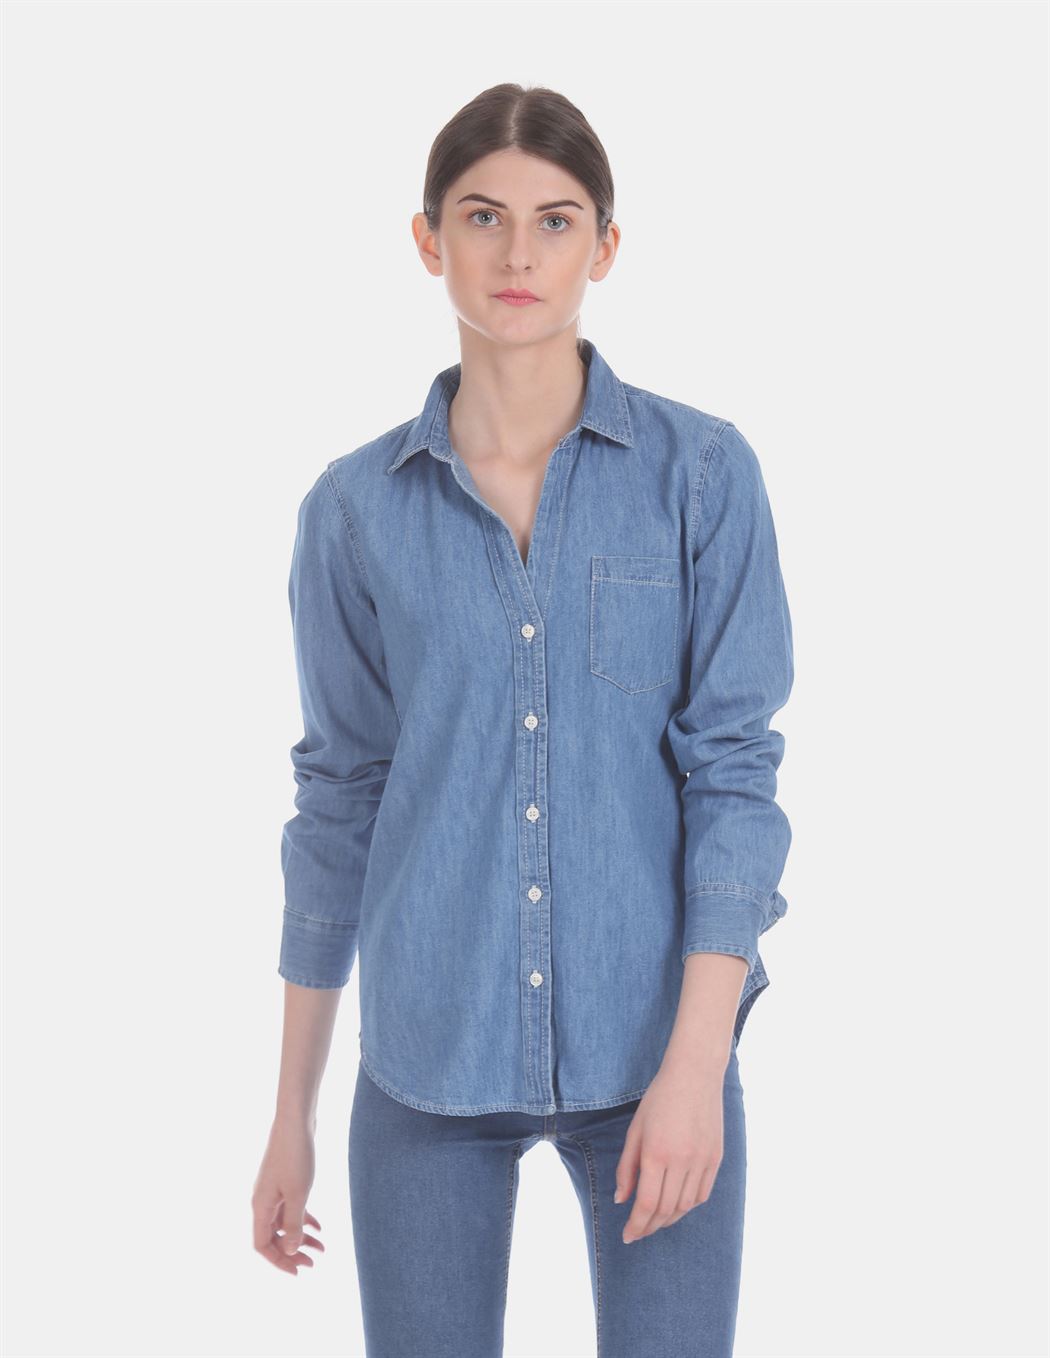 Gap Women's Casual Wear Denim Shirt